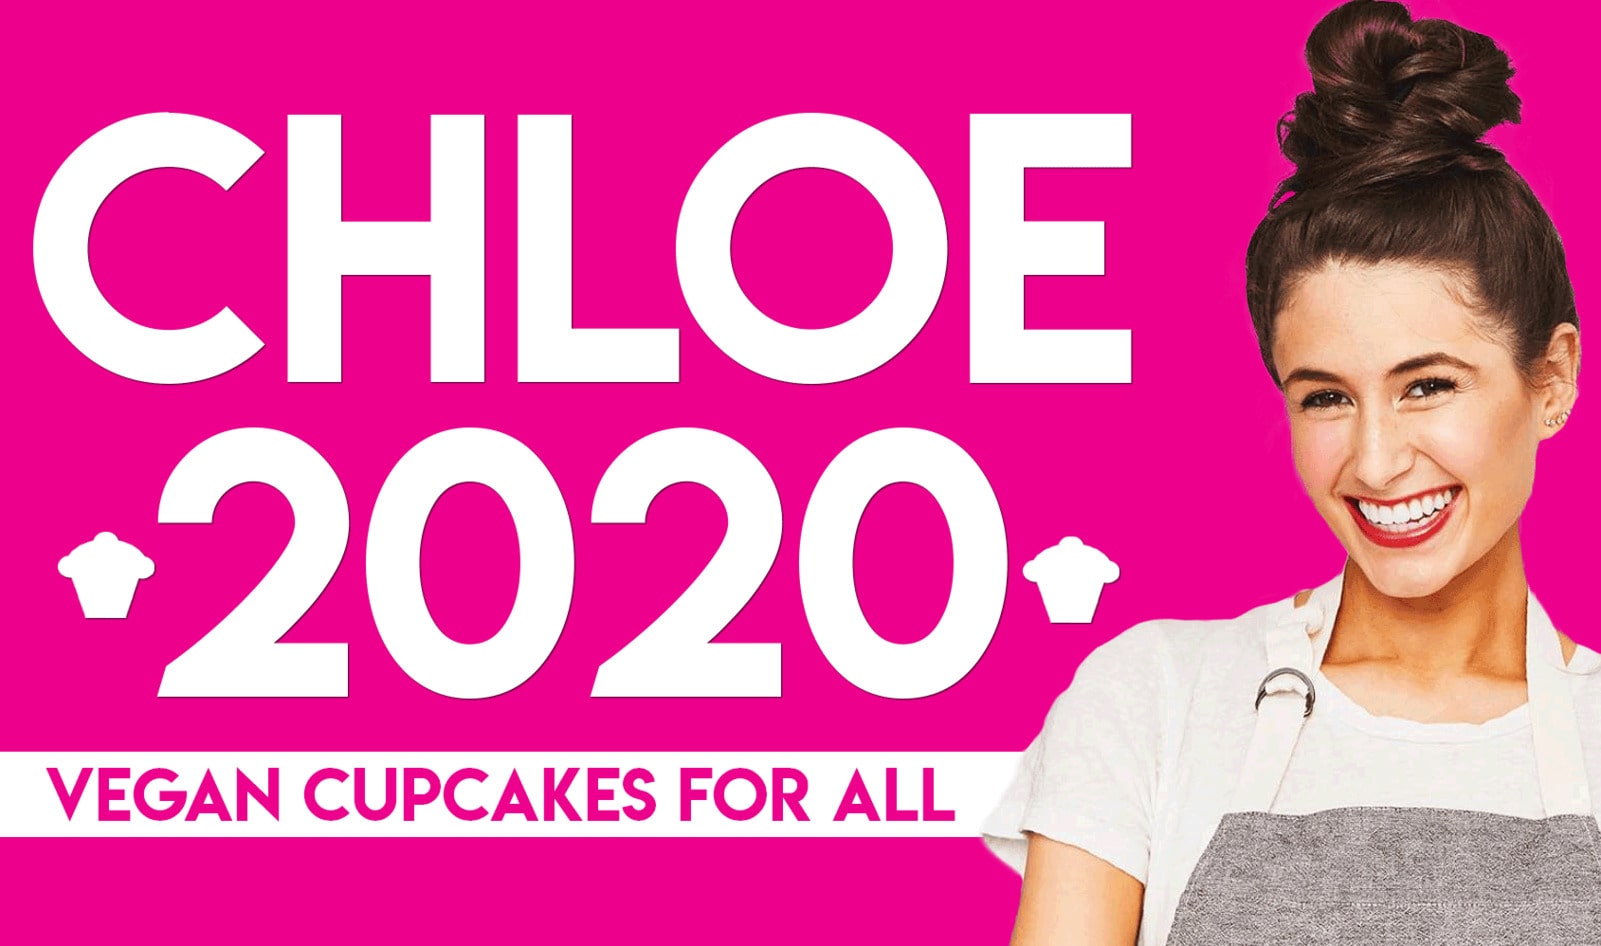 Chloe Coscarelli Announces 2020 Presidential Bid: “Vegan Cupcakes for All”